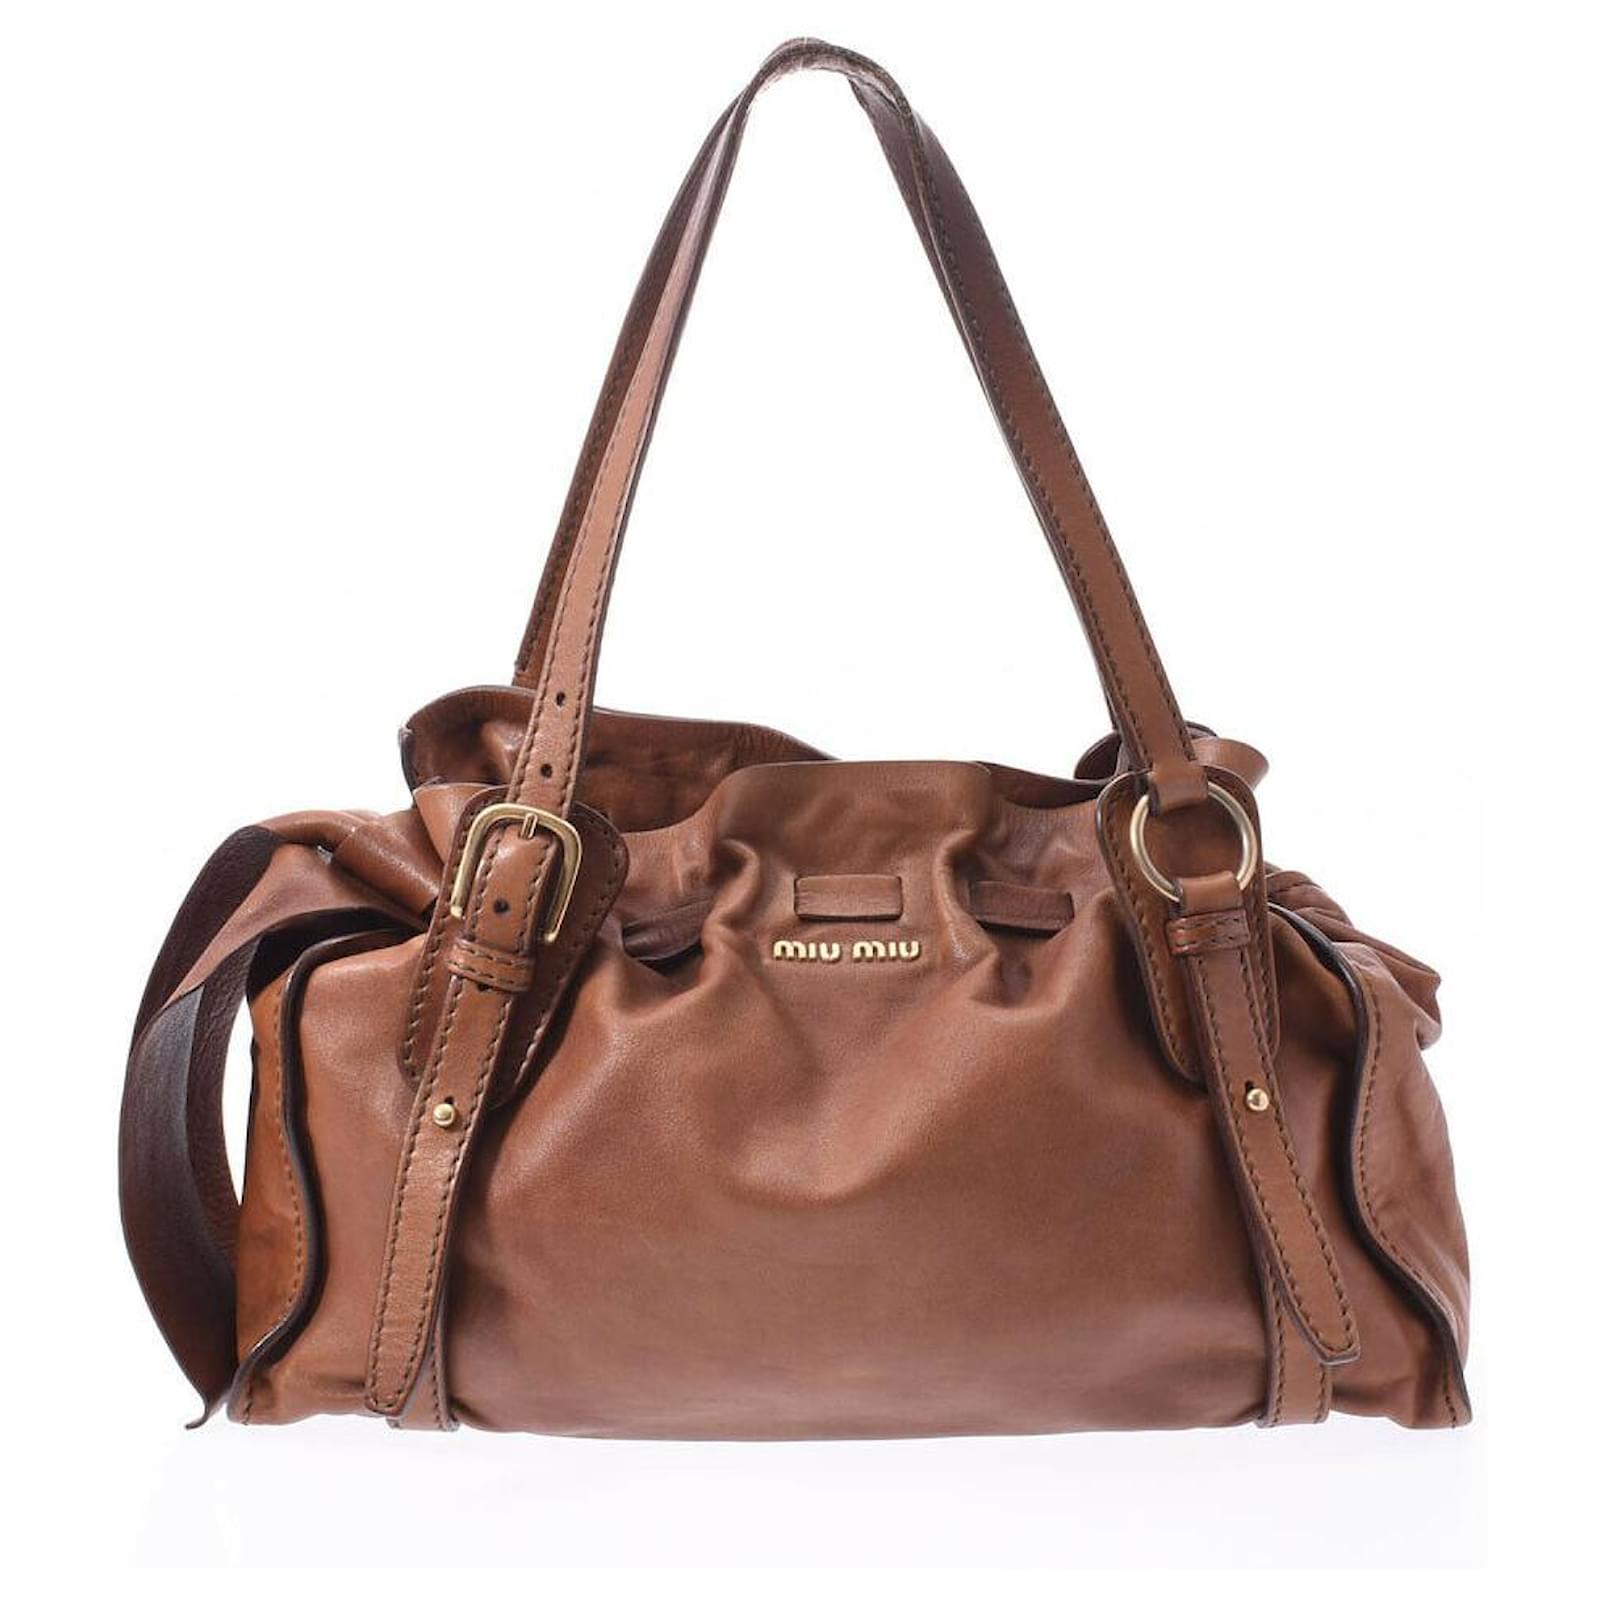 miu miu brown leather bag